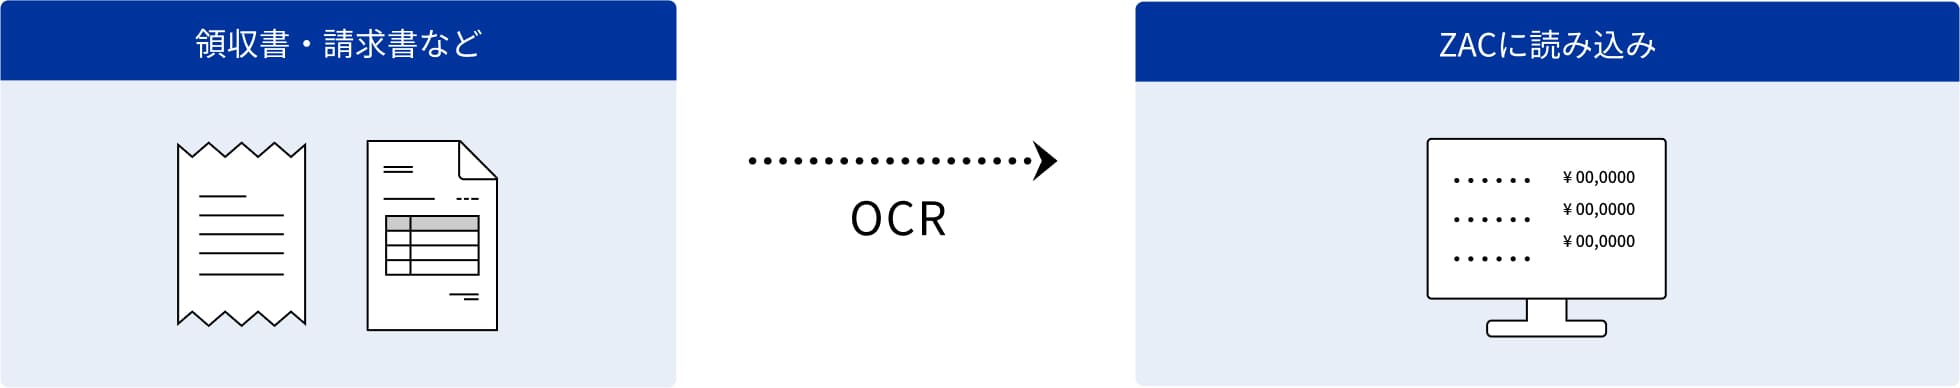 OCR機能の使用の流れ